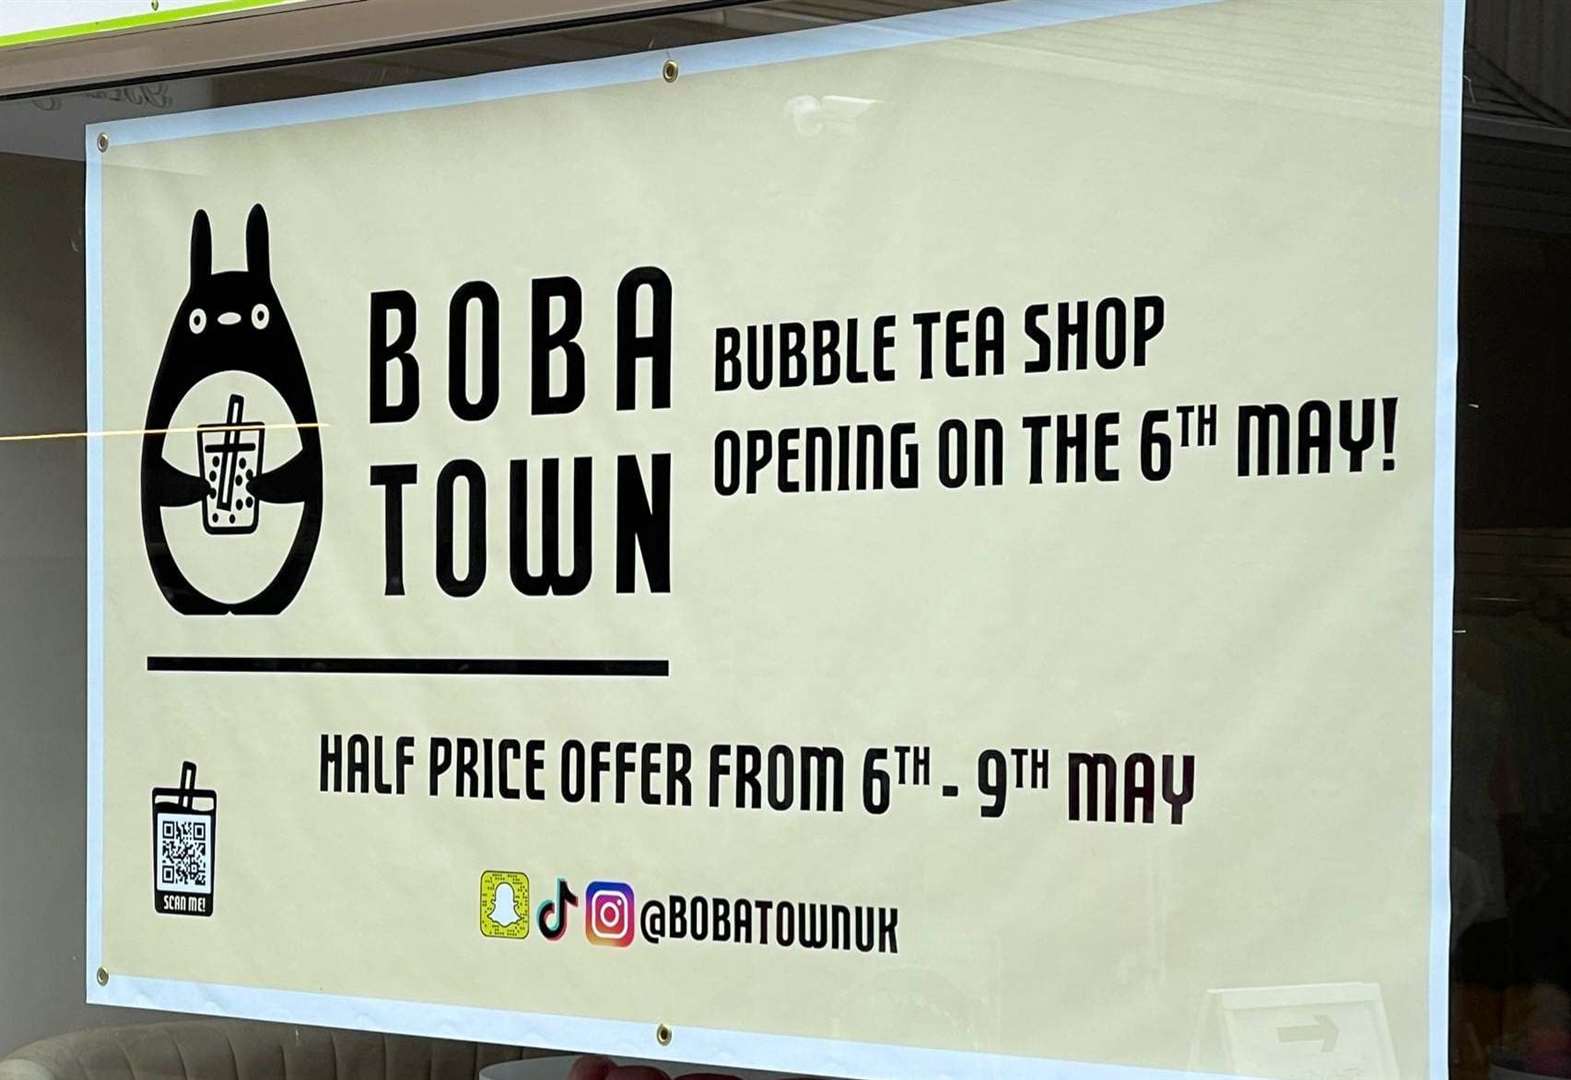 Bubble tea shop coming to town